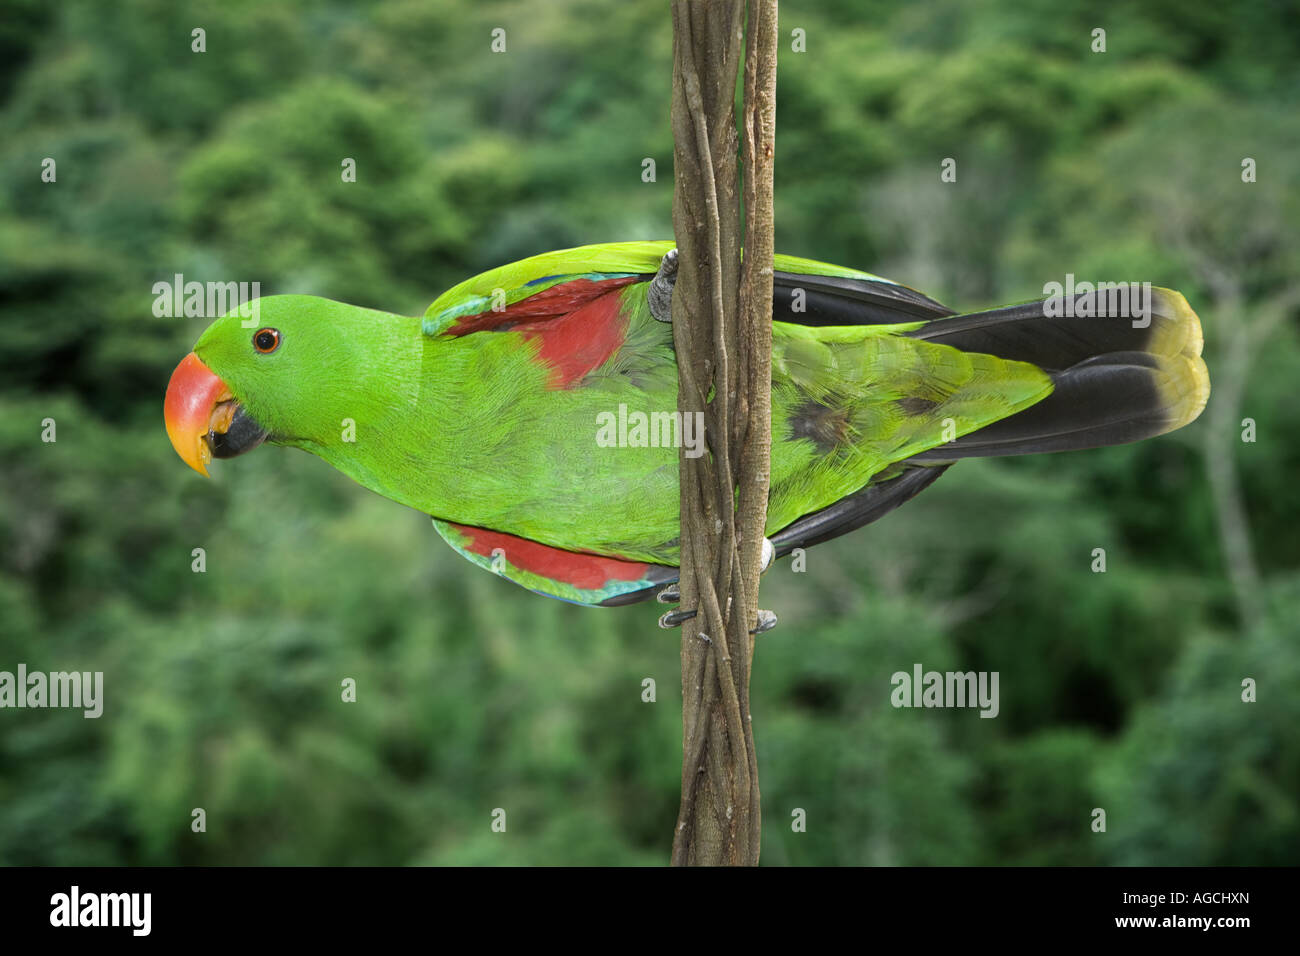 Ecclectus parrot, Papua New Guinea Stock Photo